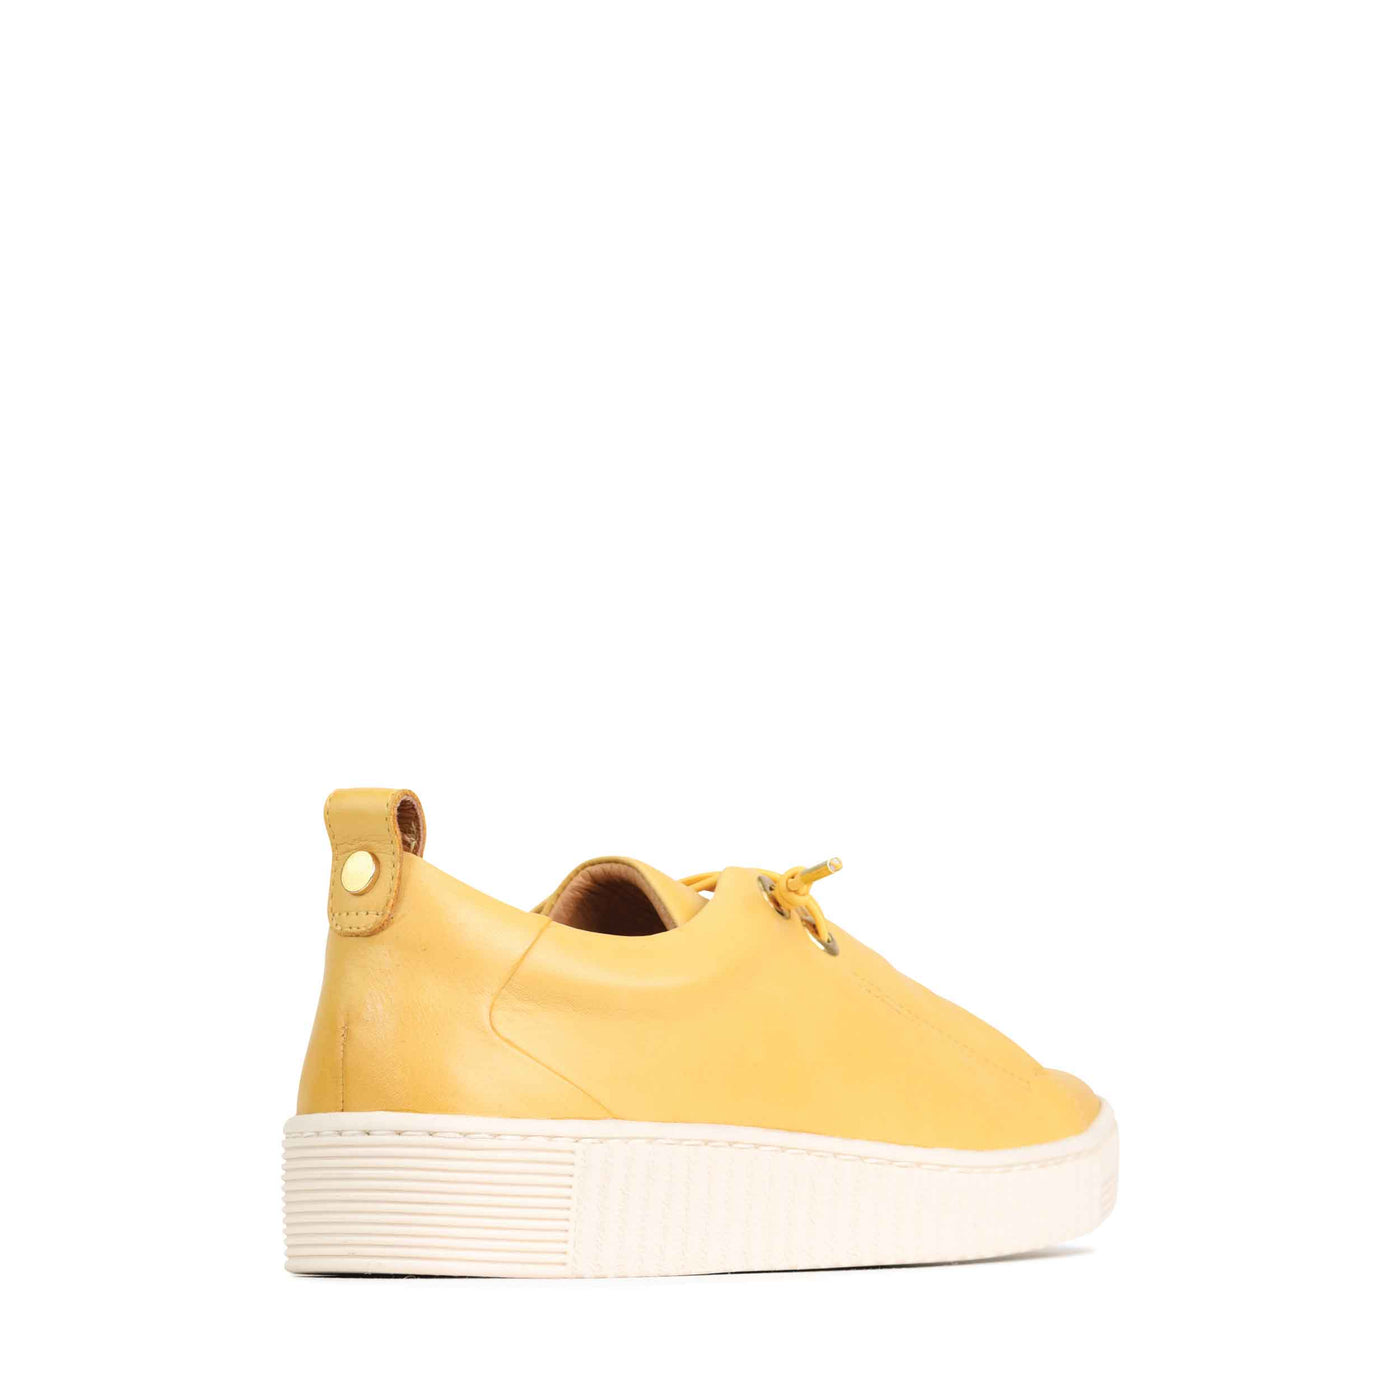 Mustard Yellow sneakers